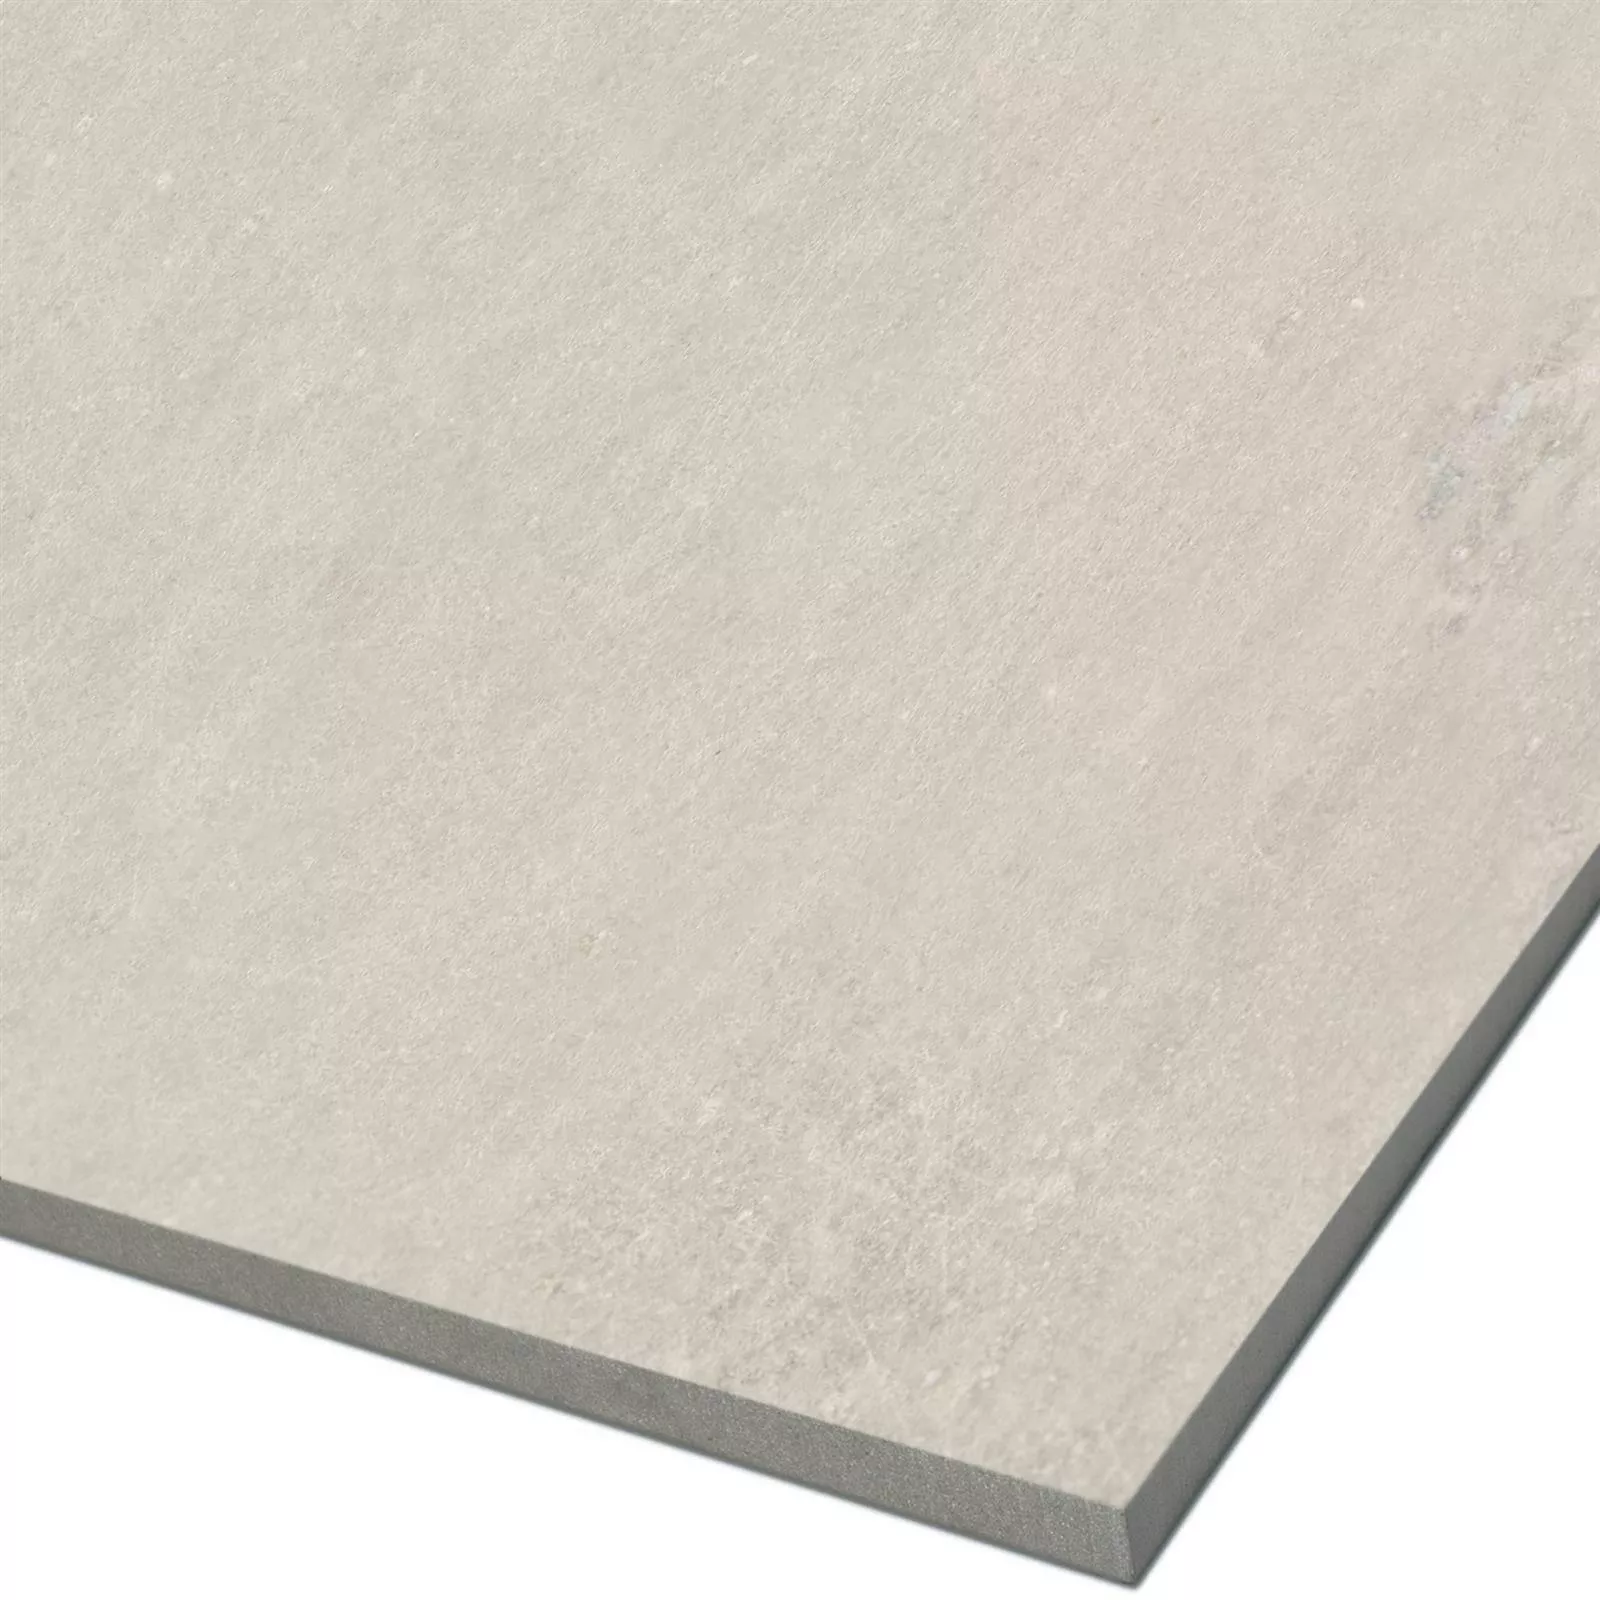 Sample Floor Tiles Peaceway Ivory 60x60cm